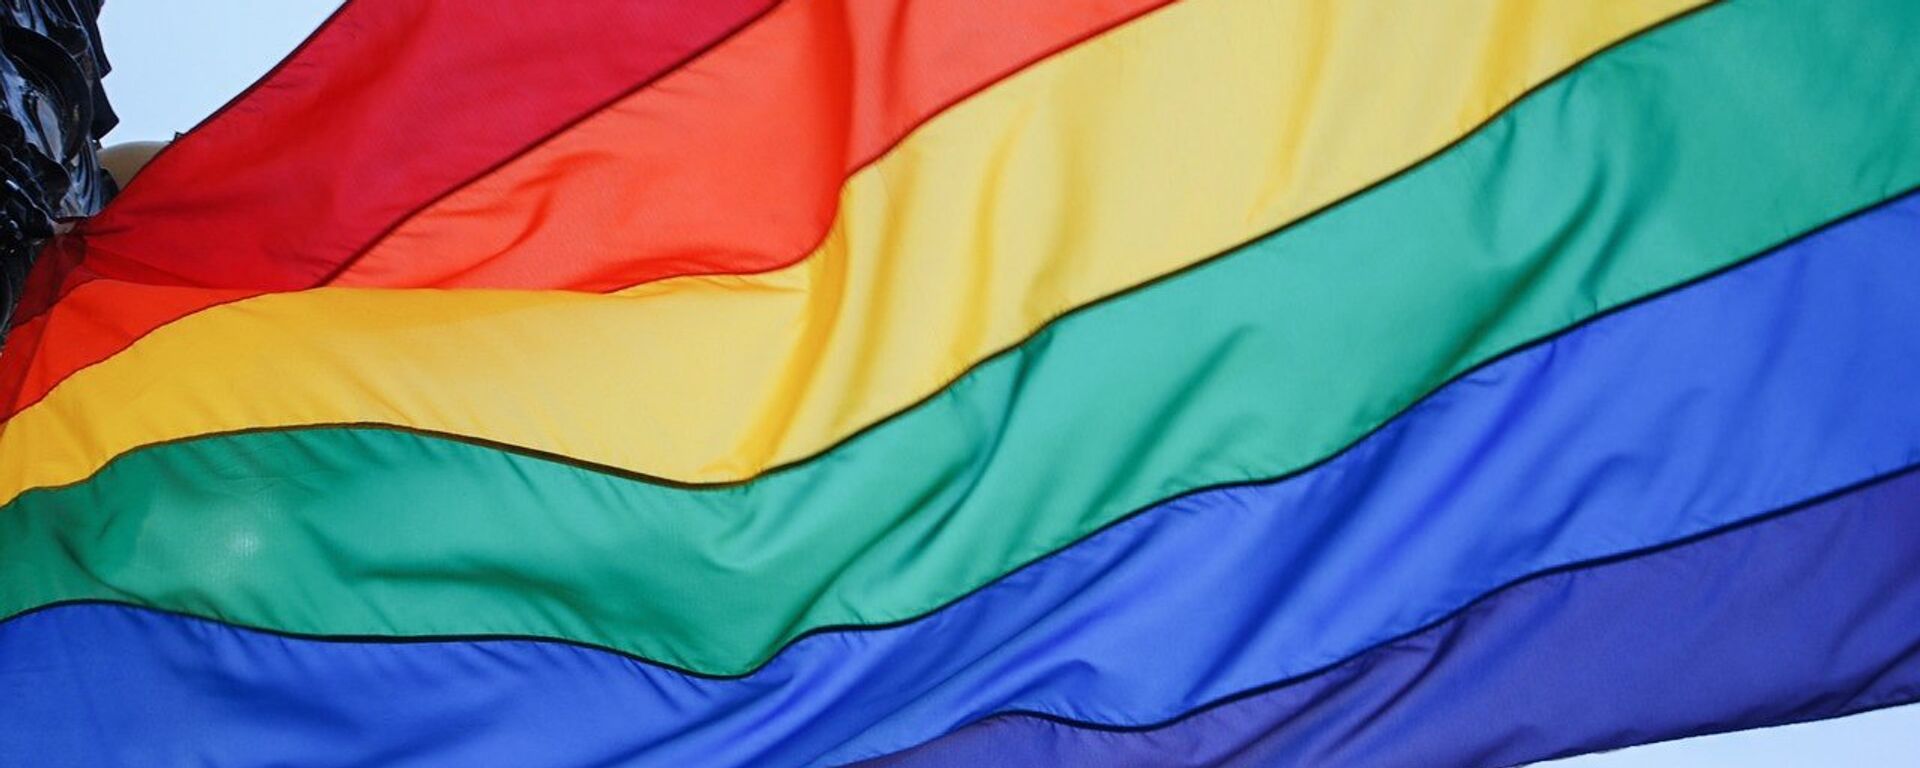 Bandera arcoíris, símbolo del movimiento LGBT - Sputnik Mundo, 1920, 05.02.2020